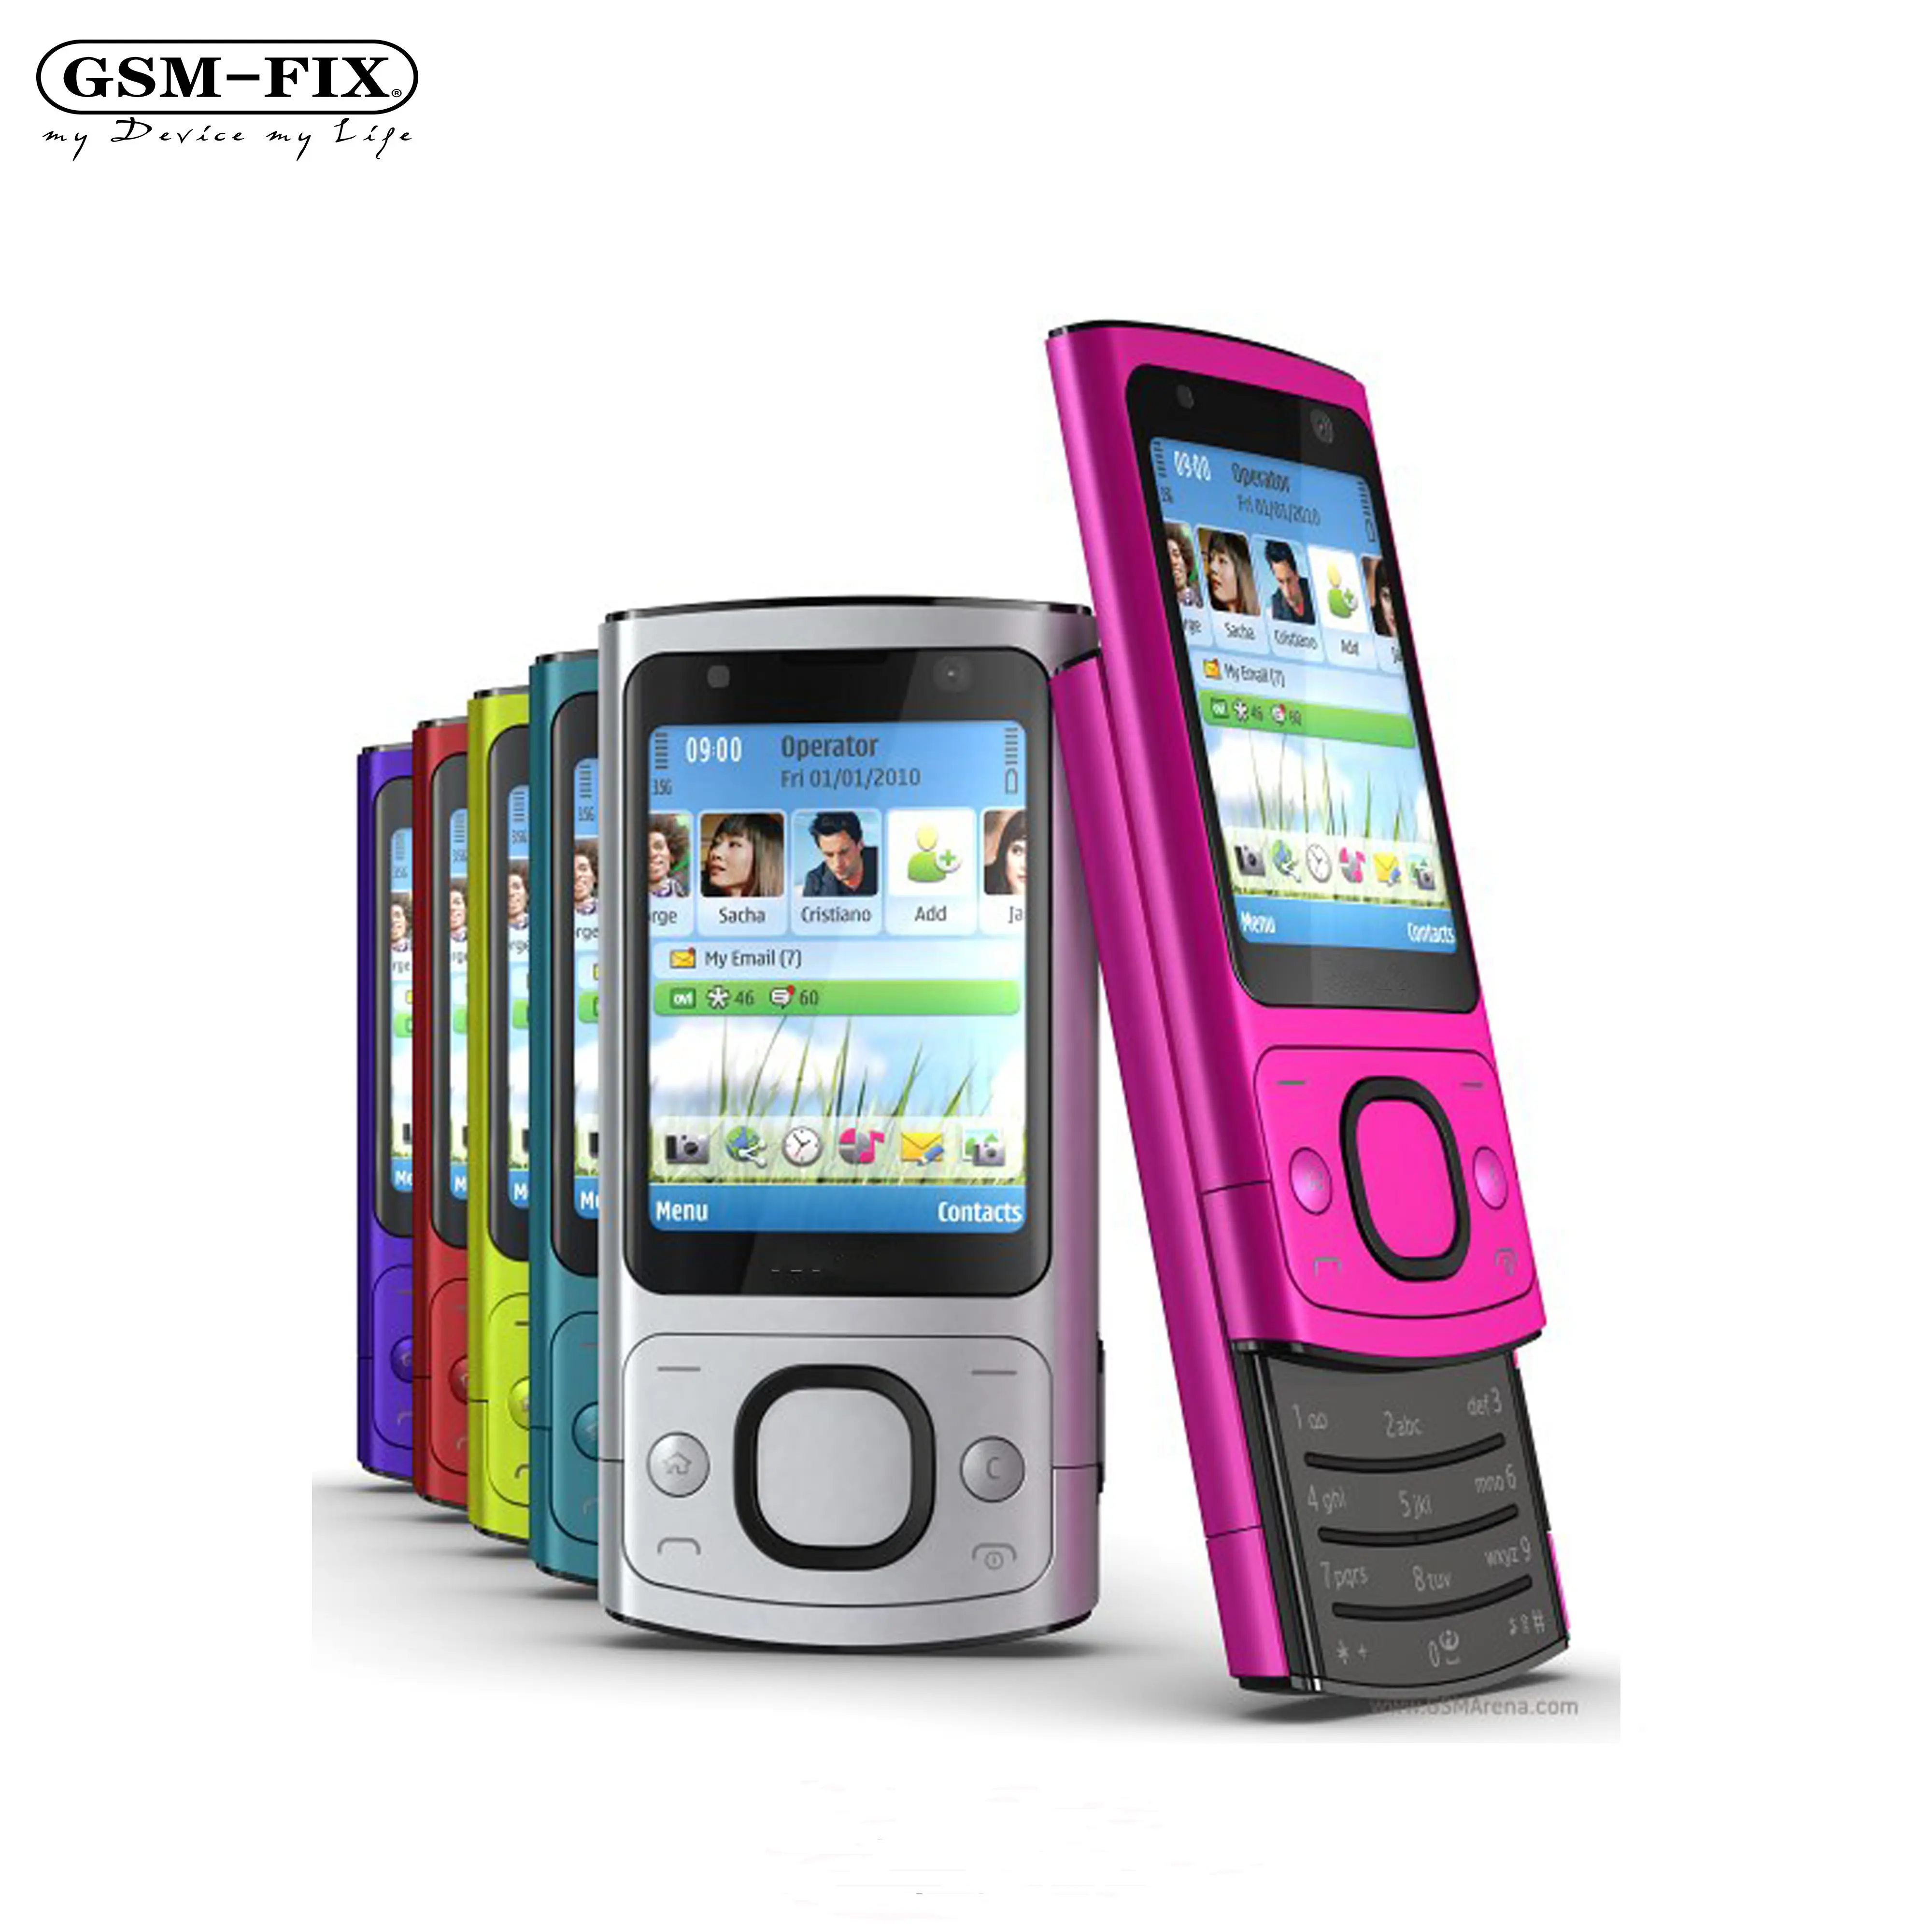 GSM-FIX מקורי 6700 s לנוקיה נייד טלפון מצלמה 5.0MP Bluetooth Java סמארטפון 6700 שקופיות טלפון